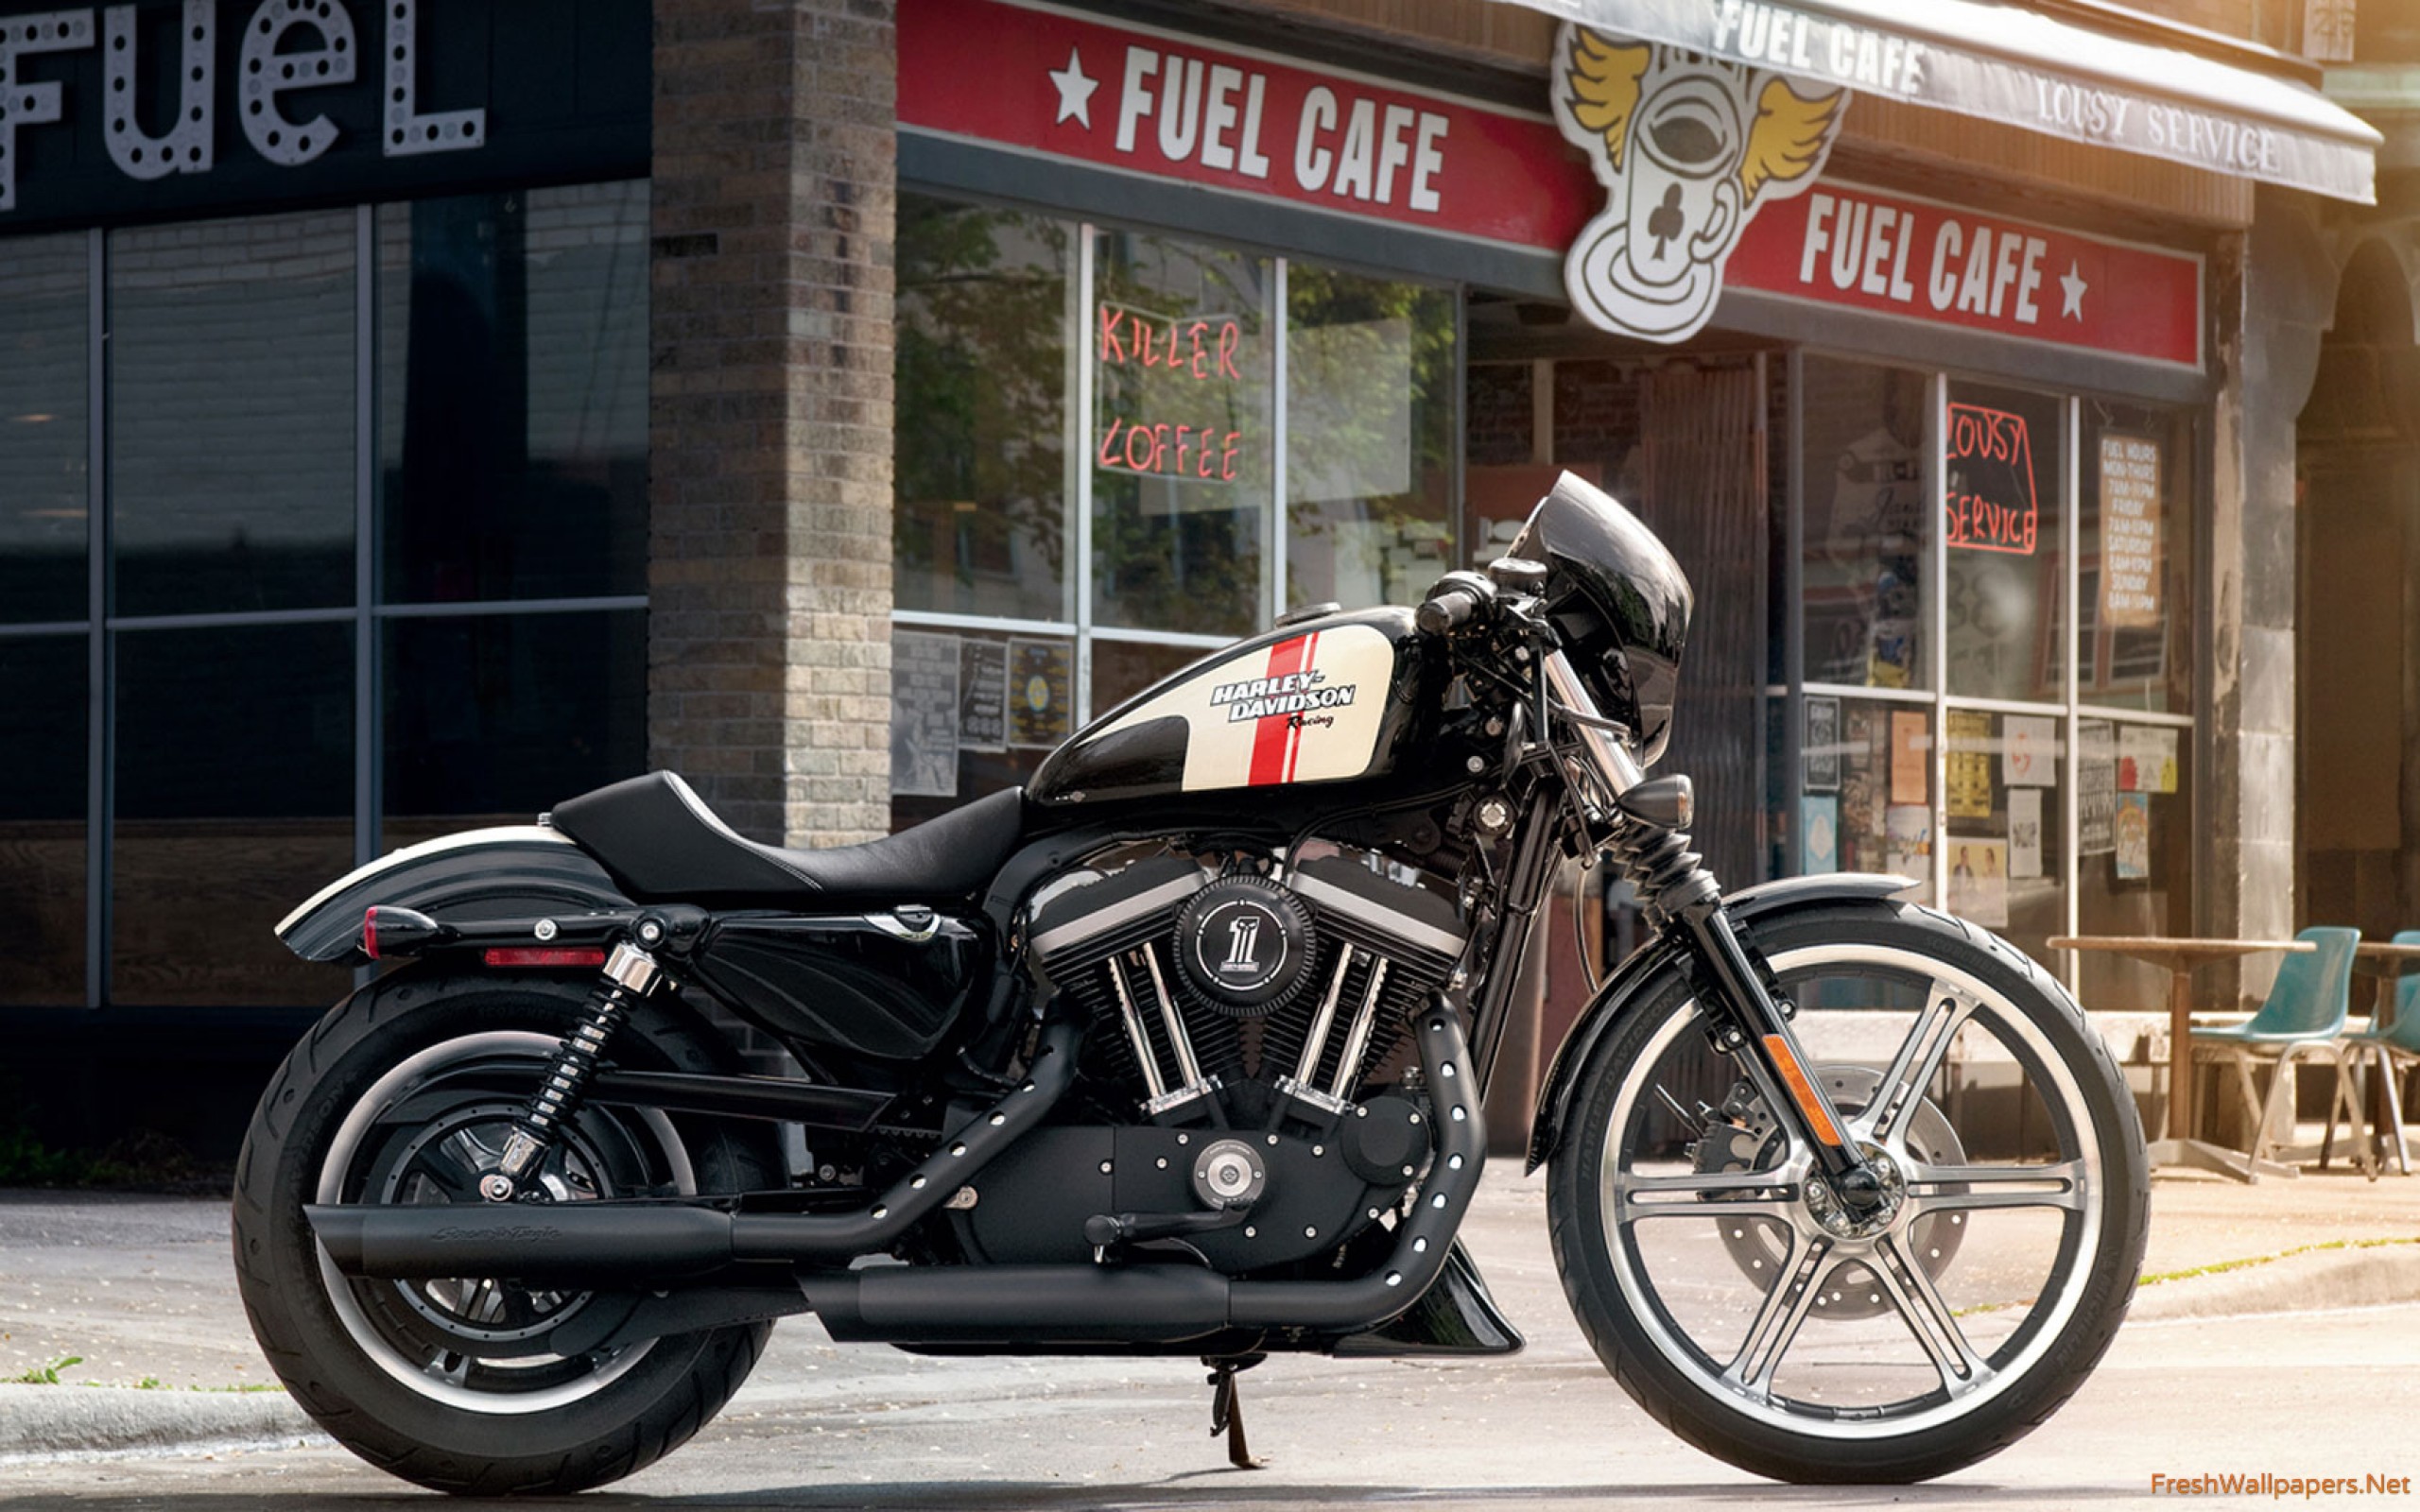 2015 Harley Davidson Iron 883 wallpapers Freshwallpapers